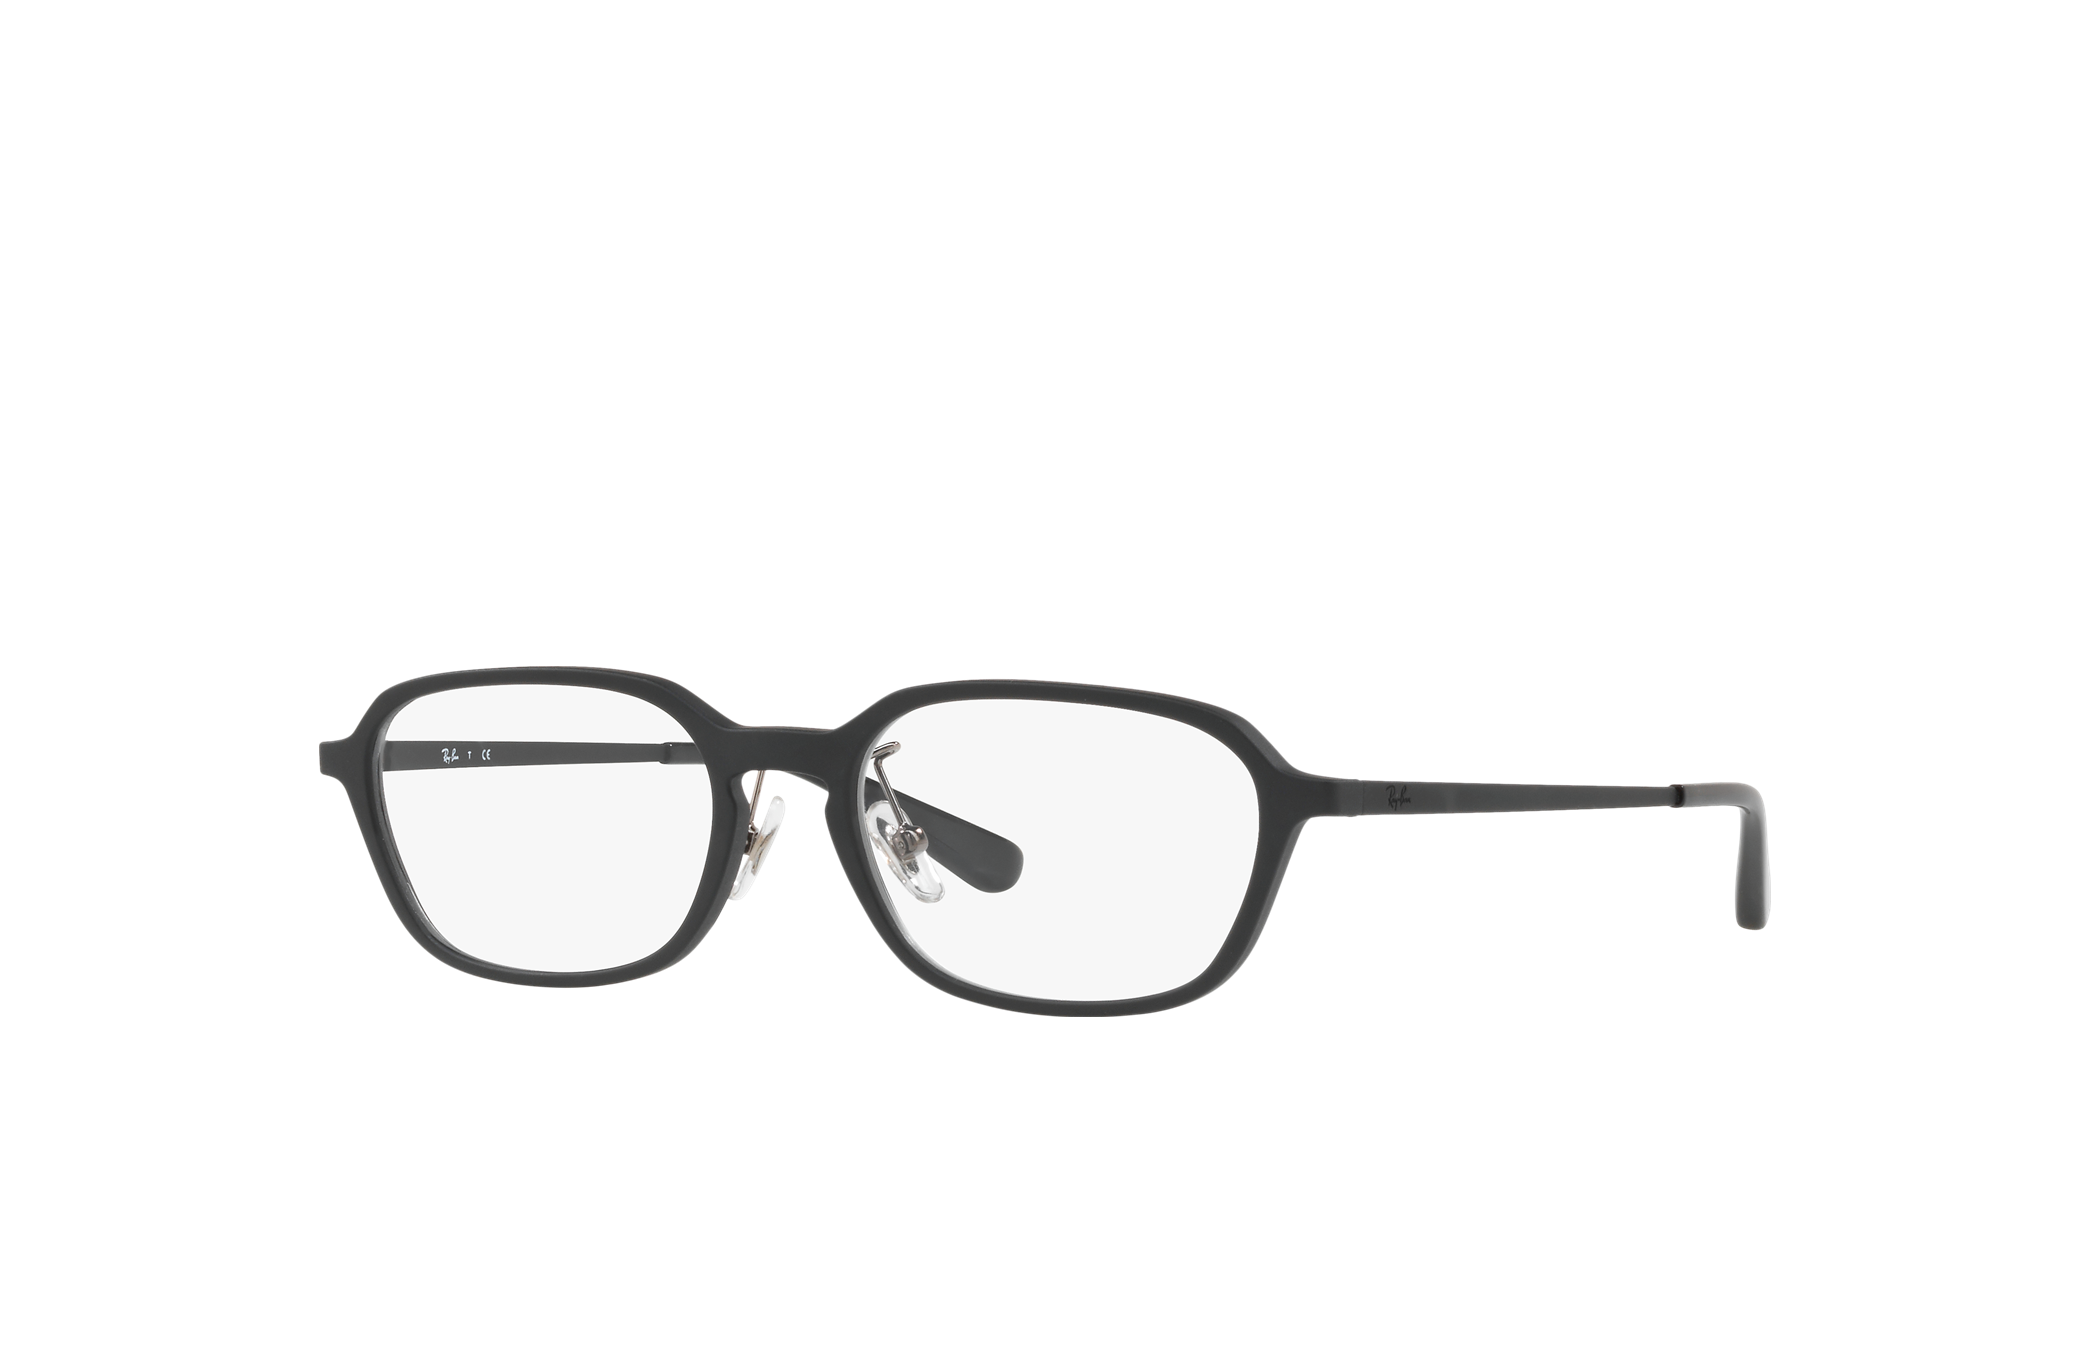 Rb7139d Eyeglasses with Black Frame - RB7139D | Ray-Ban®